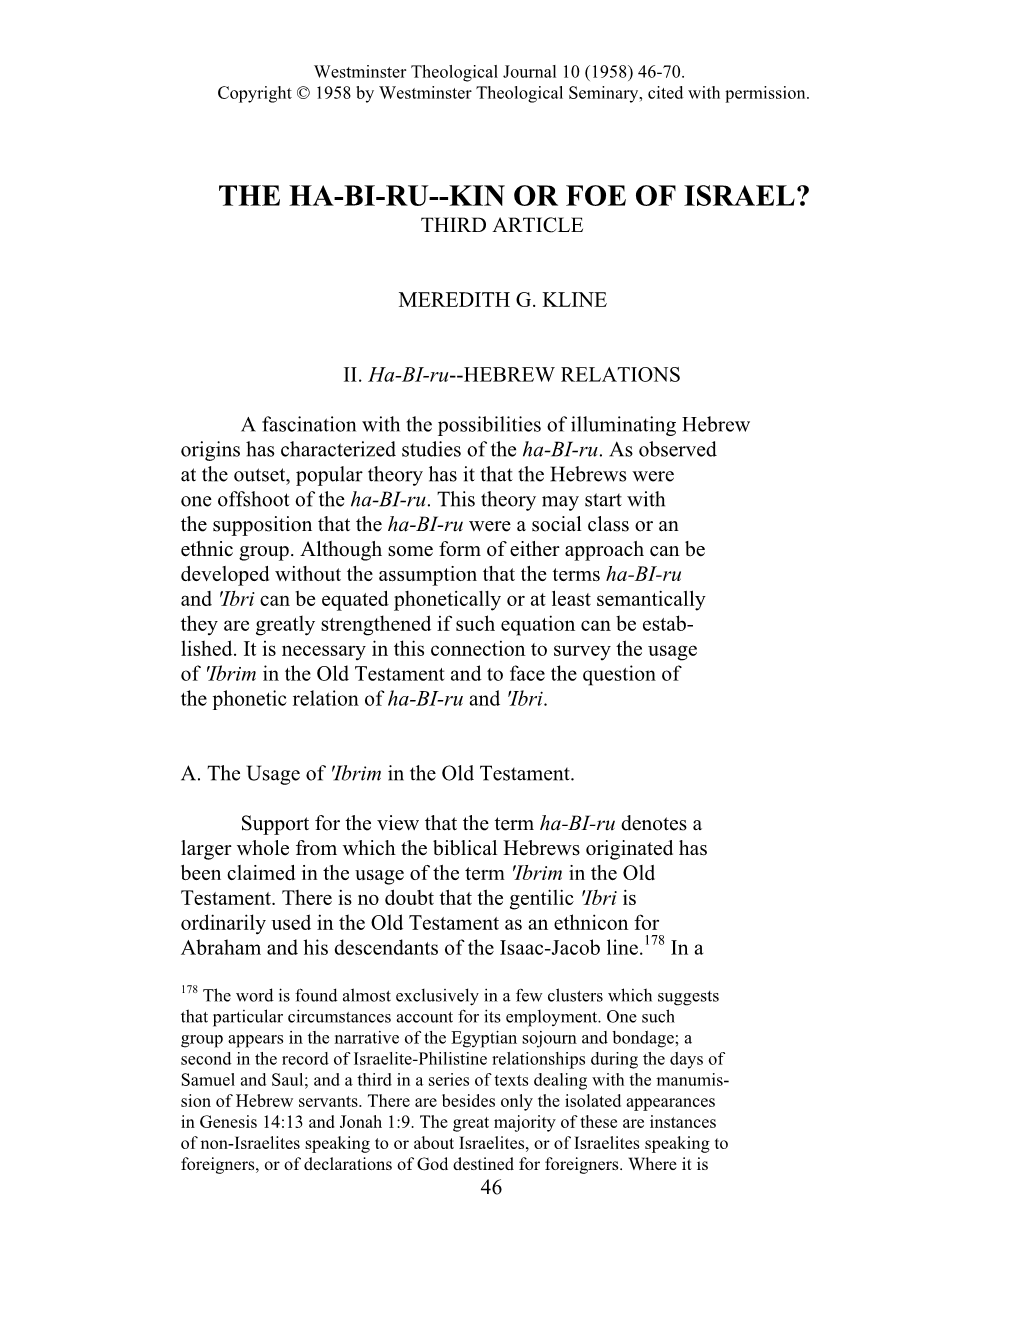 Kin Or Foe of Israel? Third Article